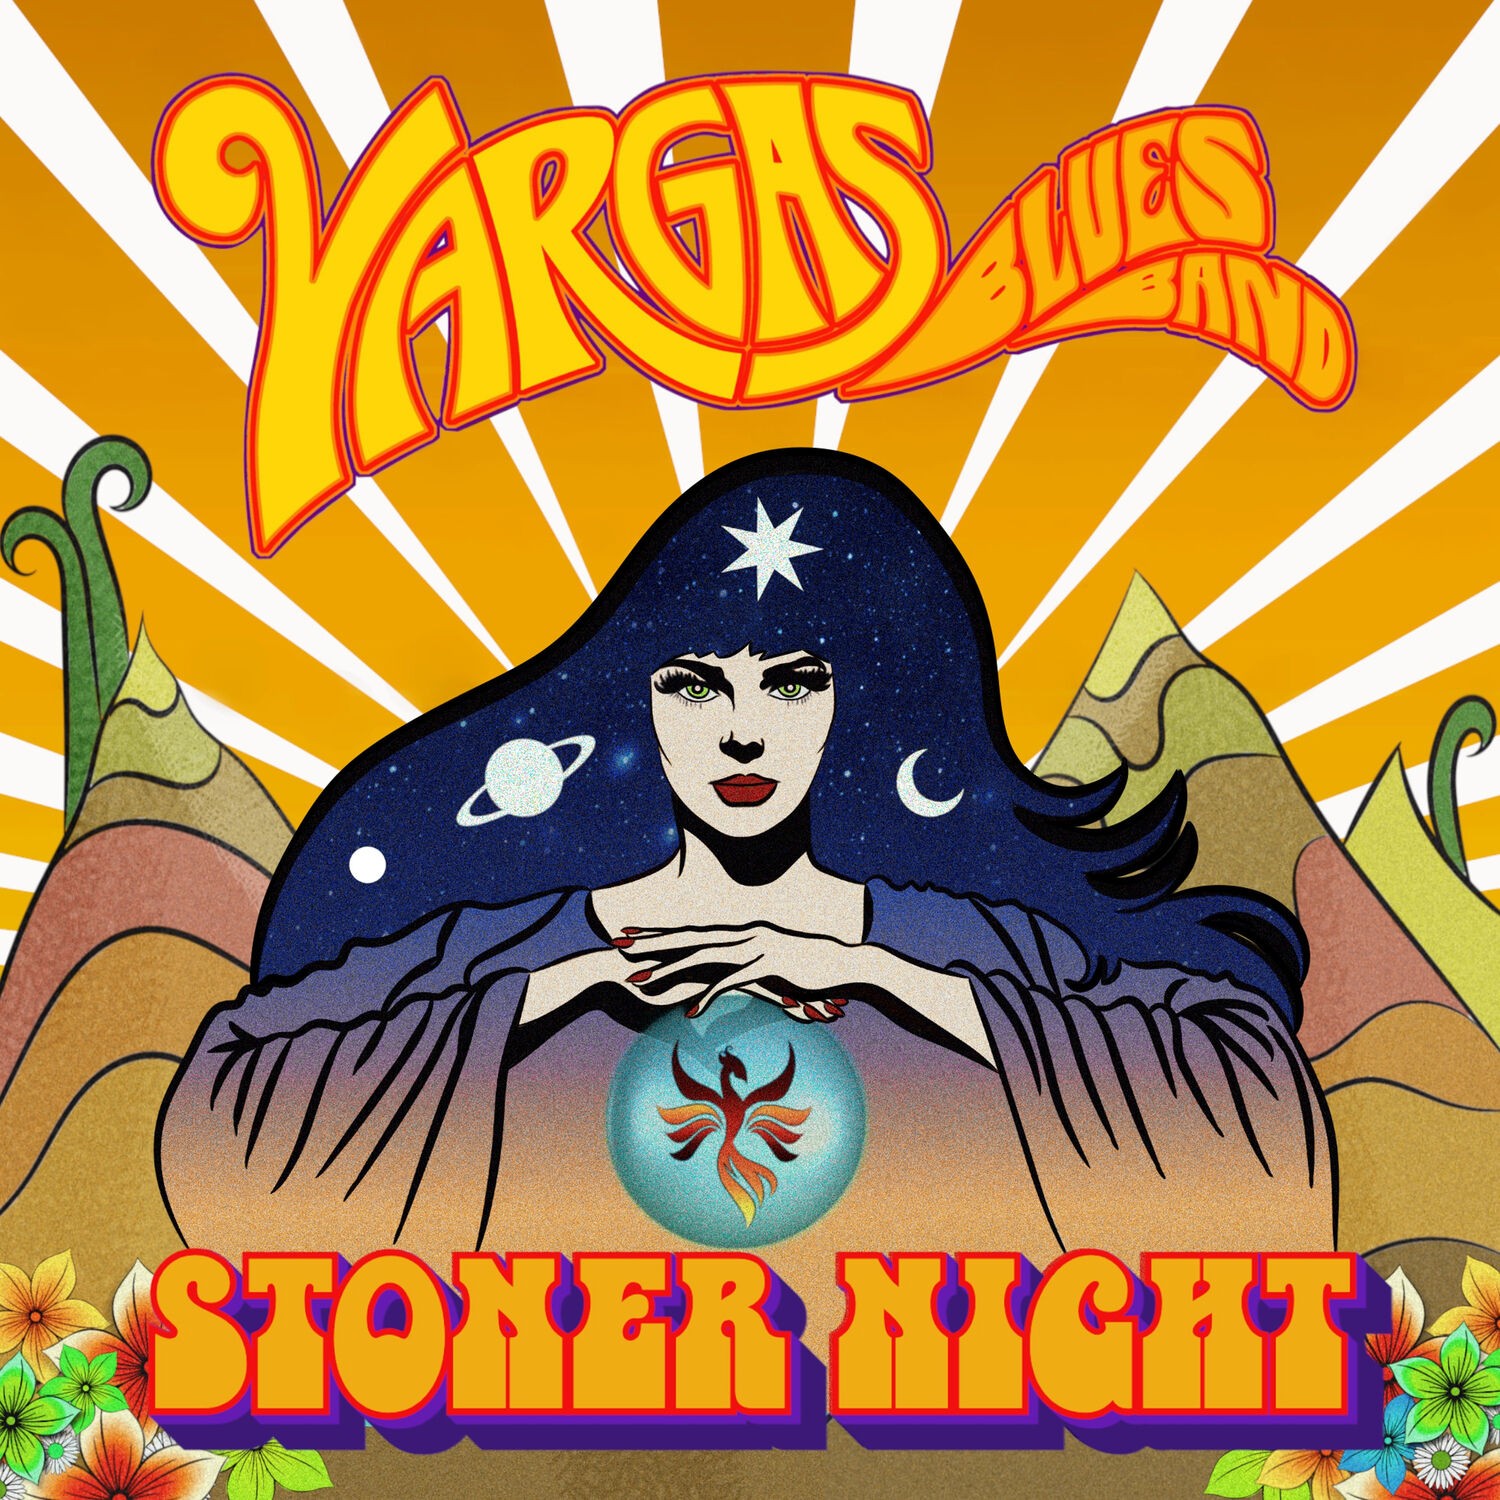 Vargas Blues Band - Stoner Night